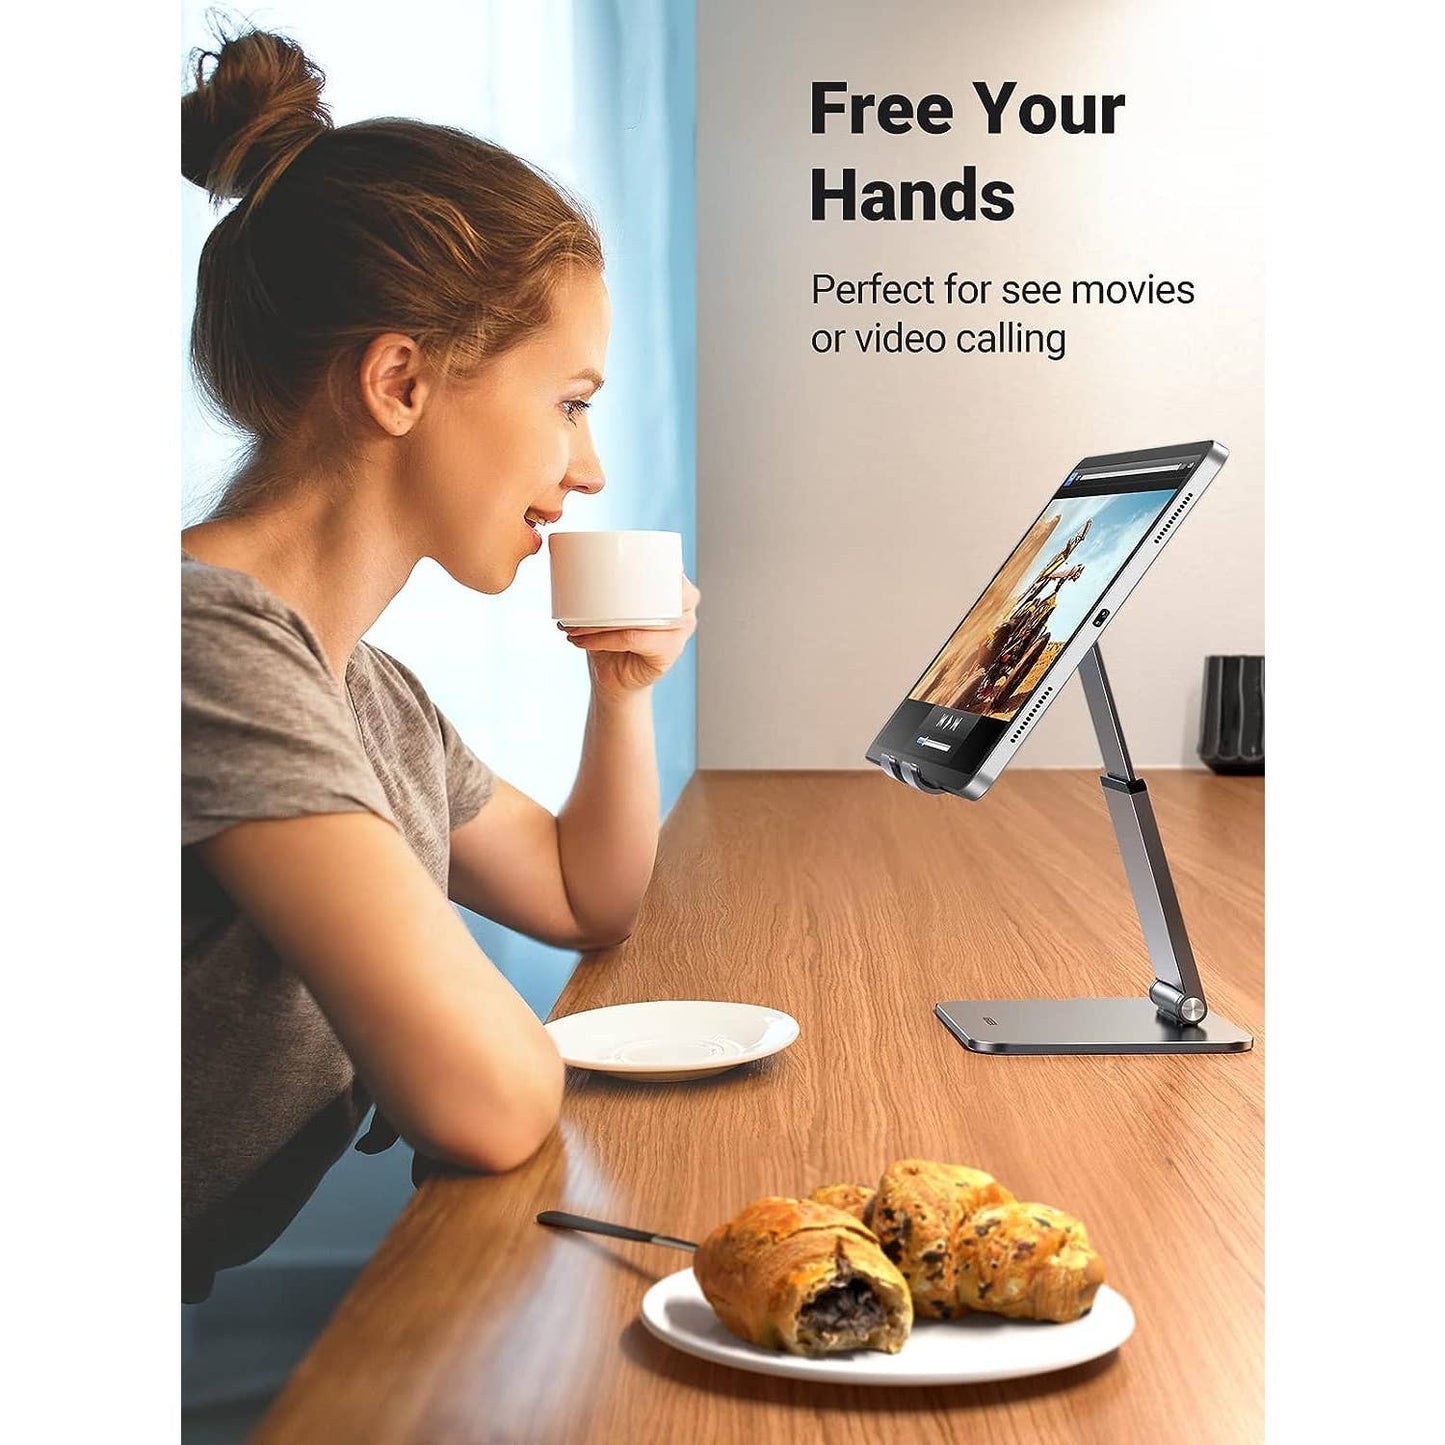 NIB-Tablet Stand Holder for Desk Height Adjustable Aluminum Foldable